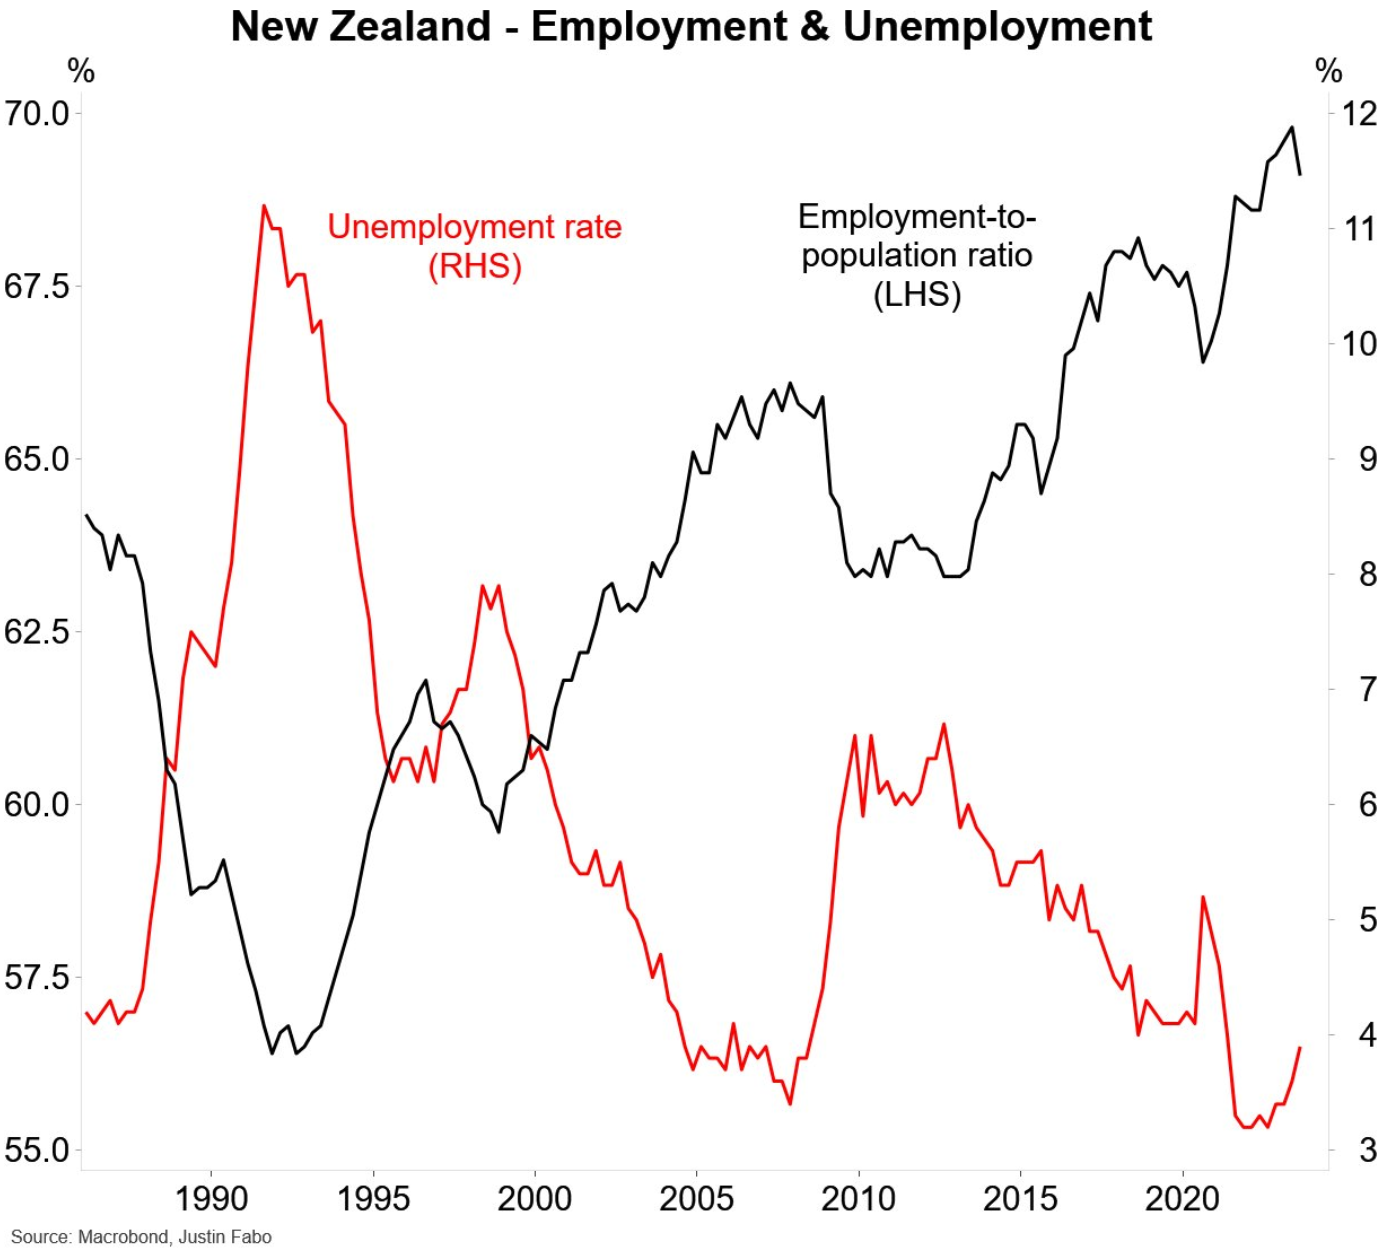 Employment and unemployment